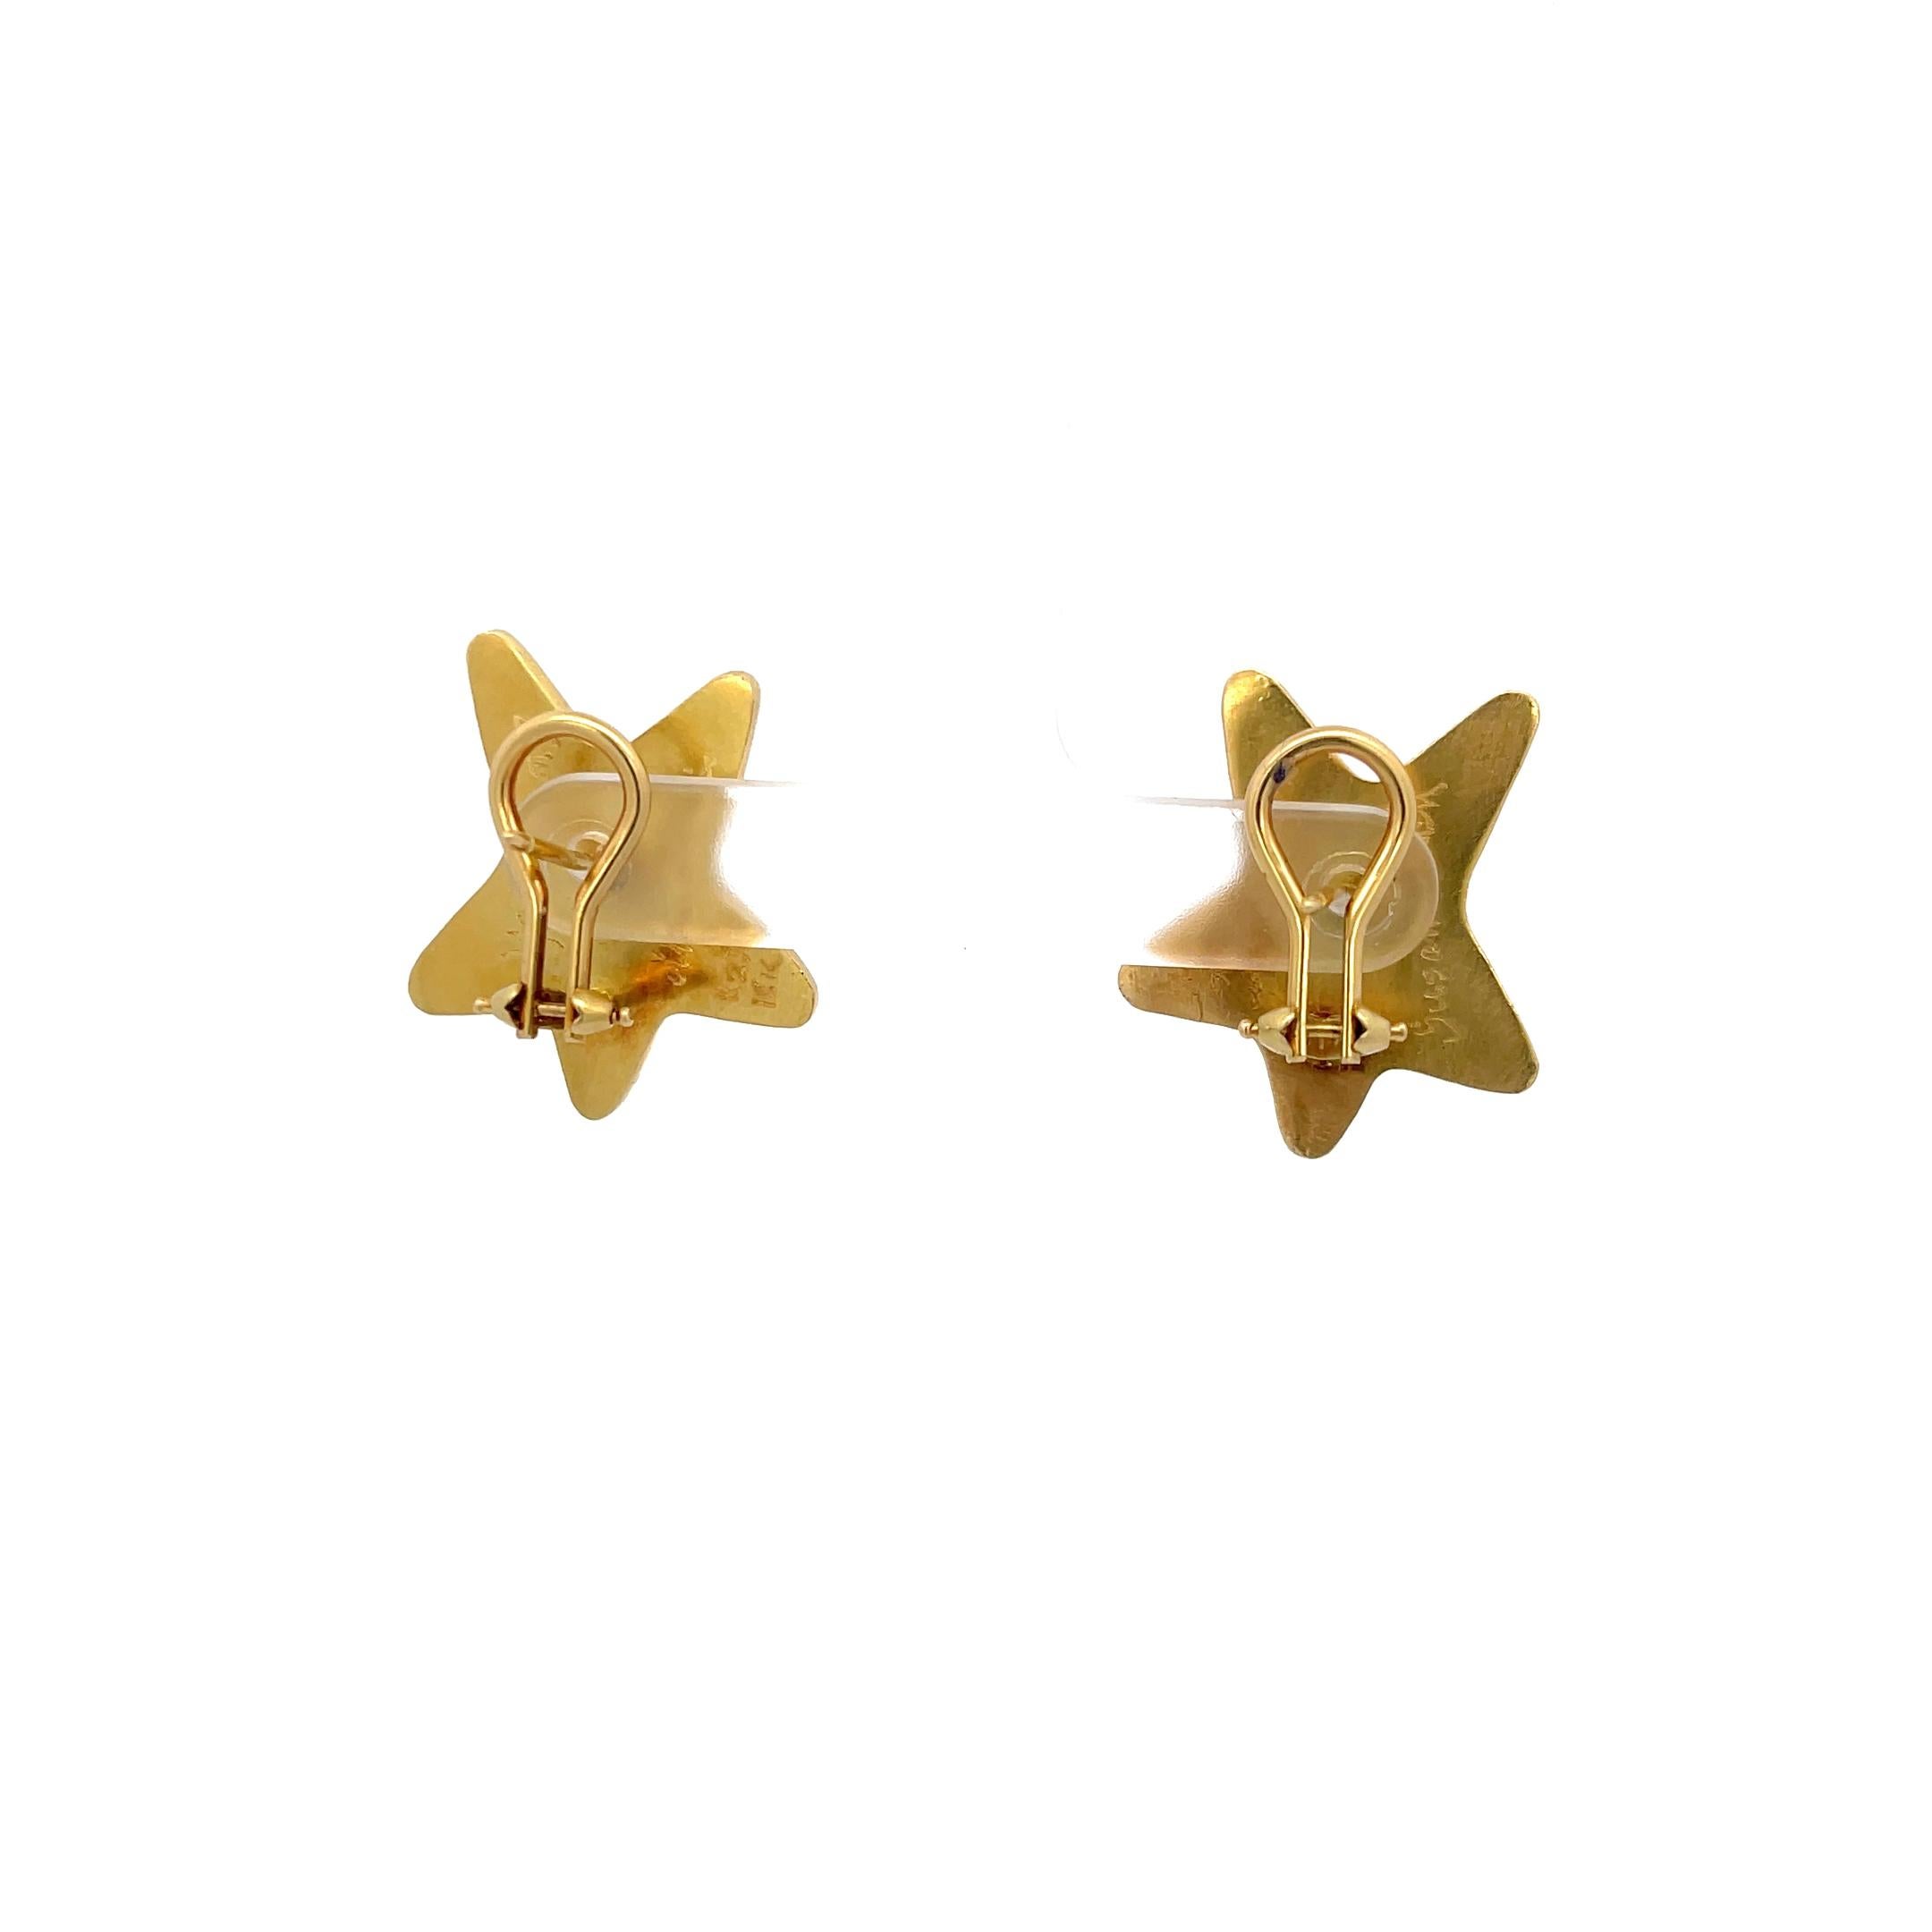 22k yellow gold stud earrings handmade yellow gold earrings for women